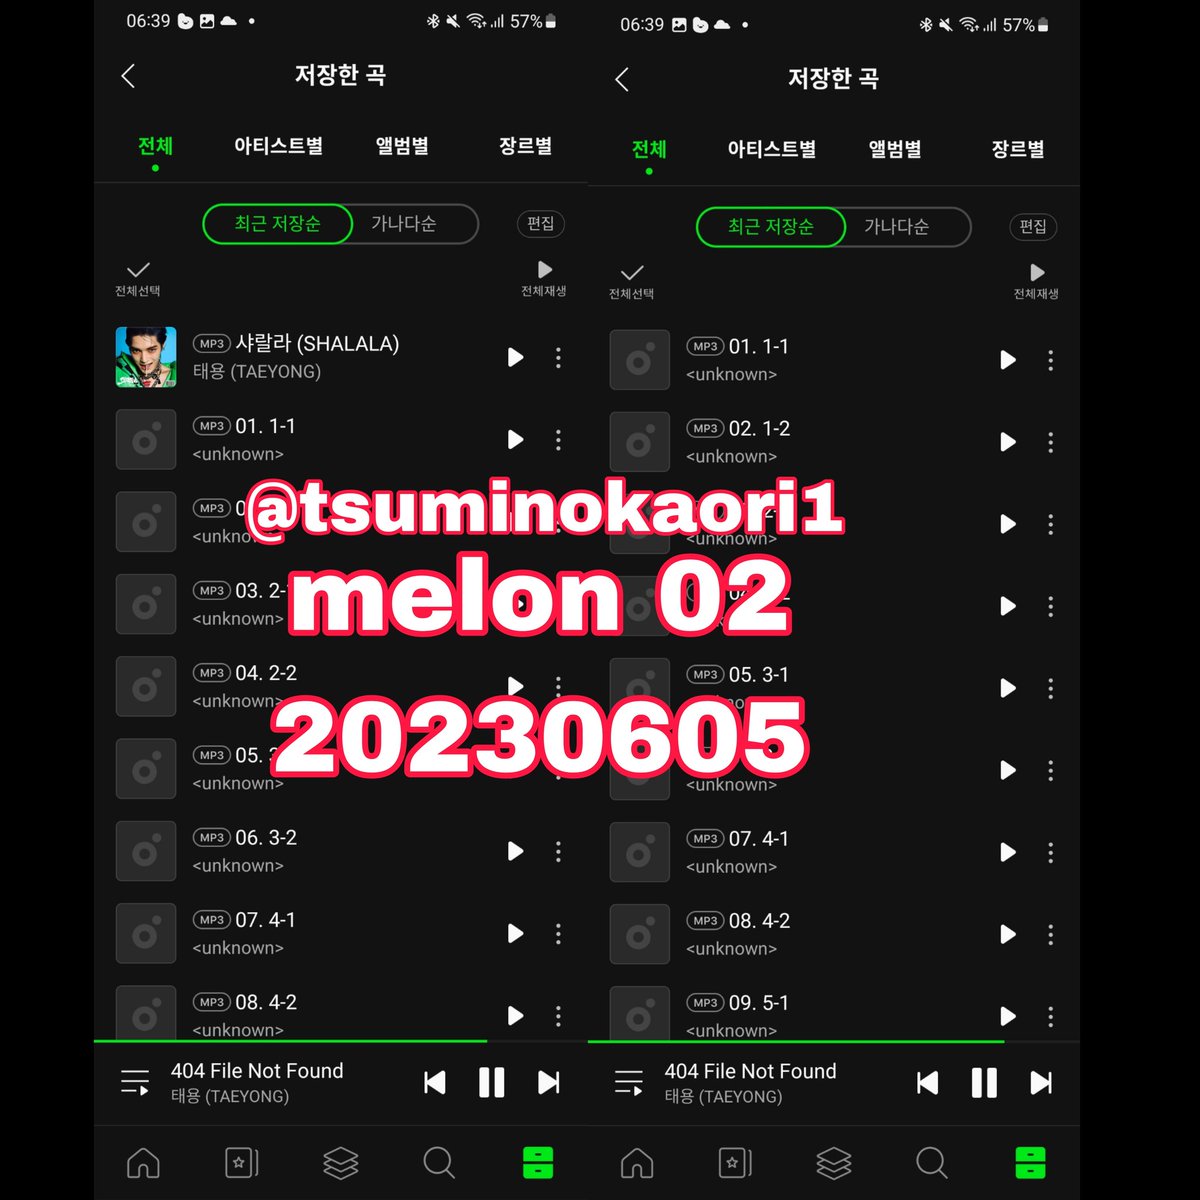 Download
#TeamMelon #TaeyongShalalaTYP